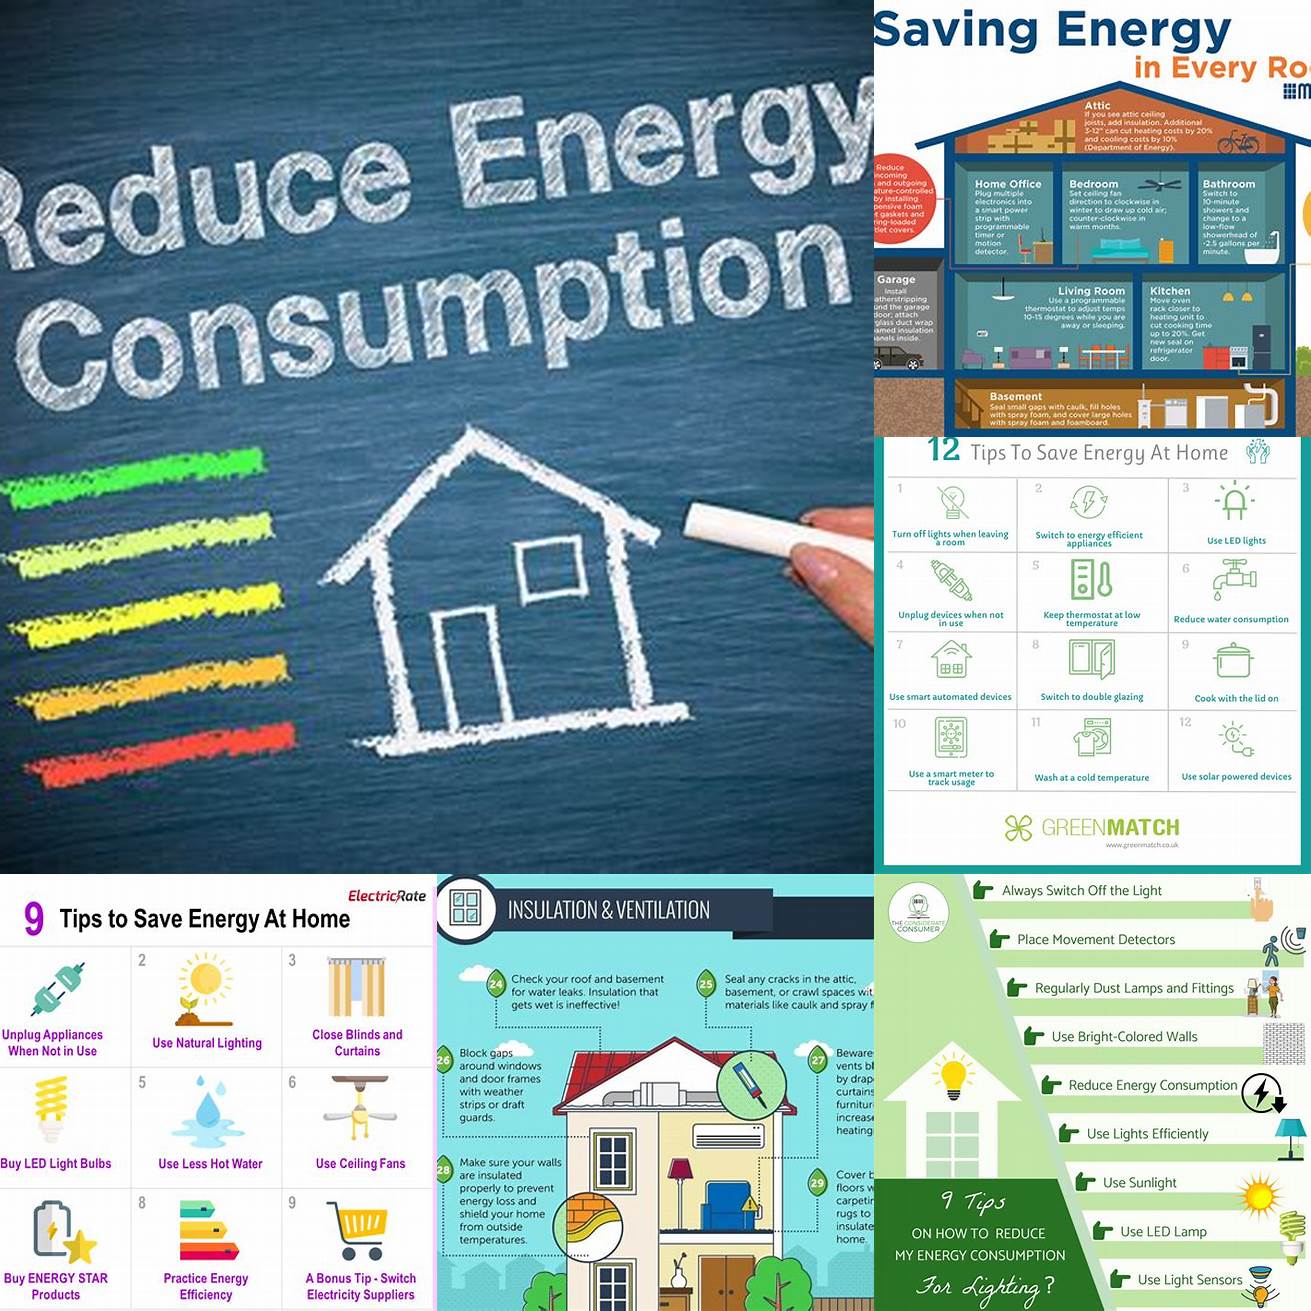 Reducing energy use